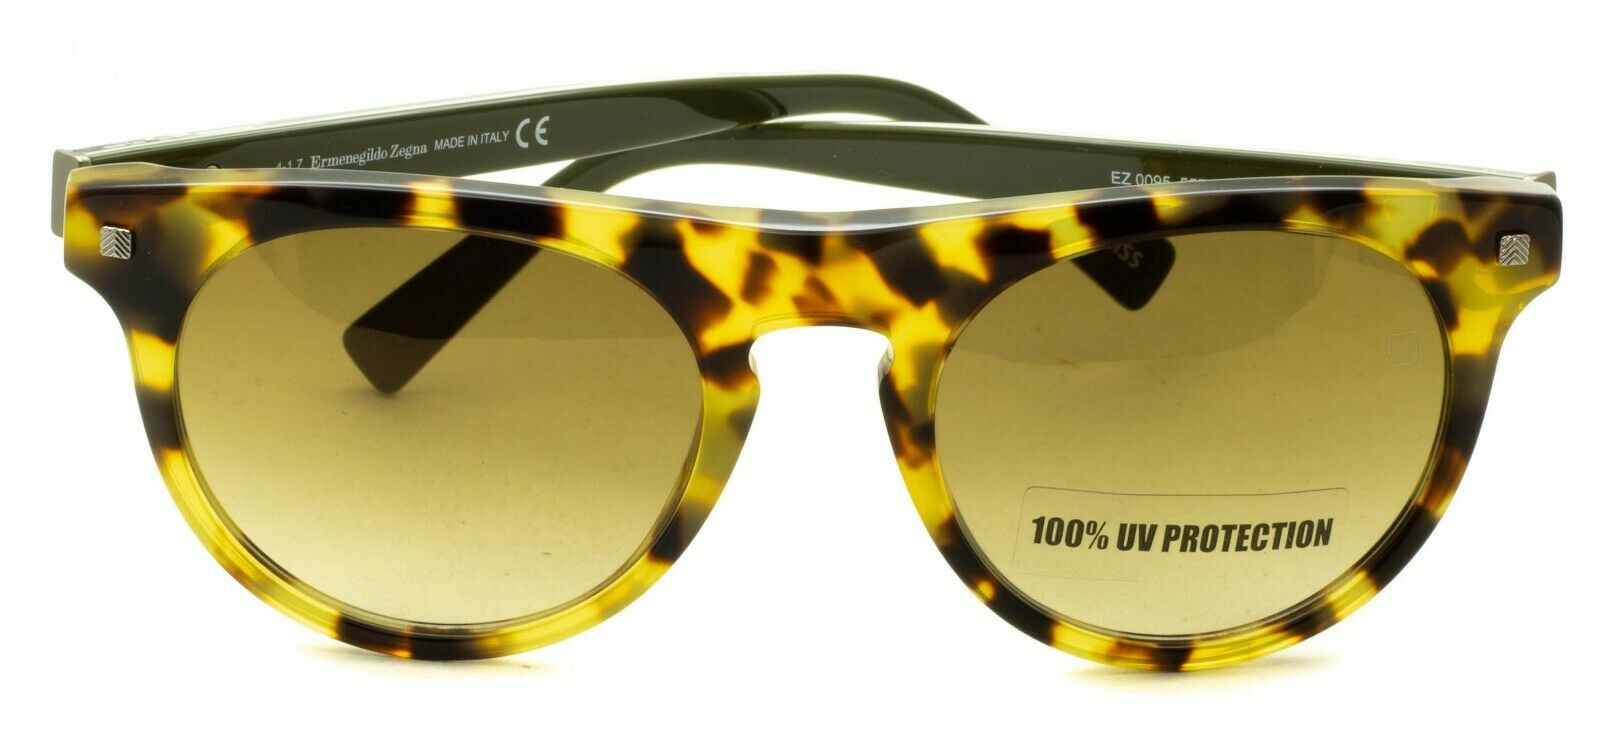 ERMENEGILDO ZEGNA EZ 0095 55F 50mm Sunglasses Shades Frames Eyewear New - Italy